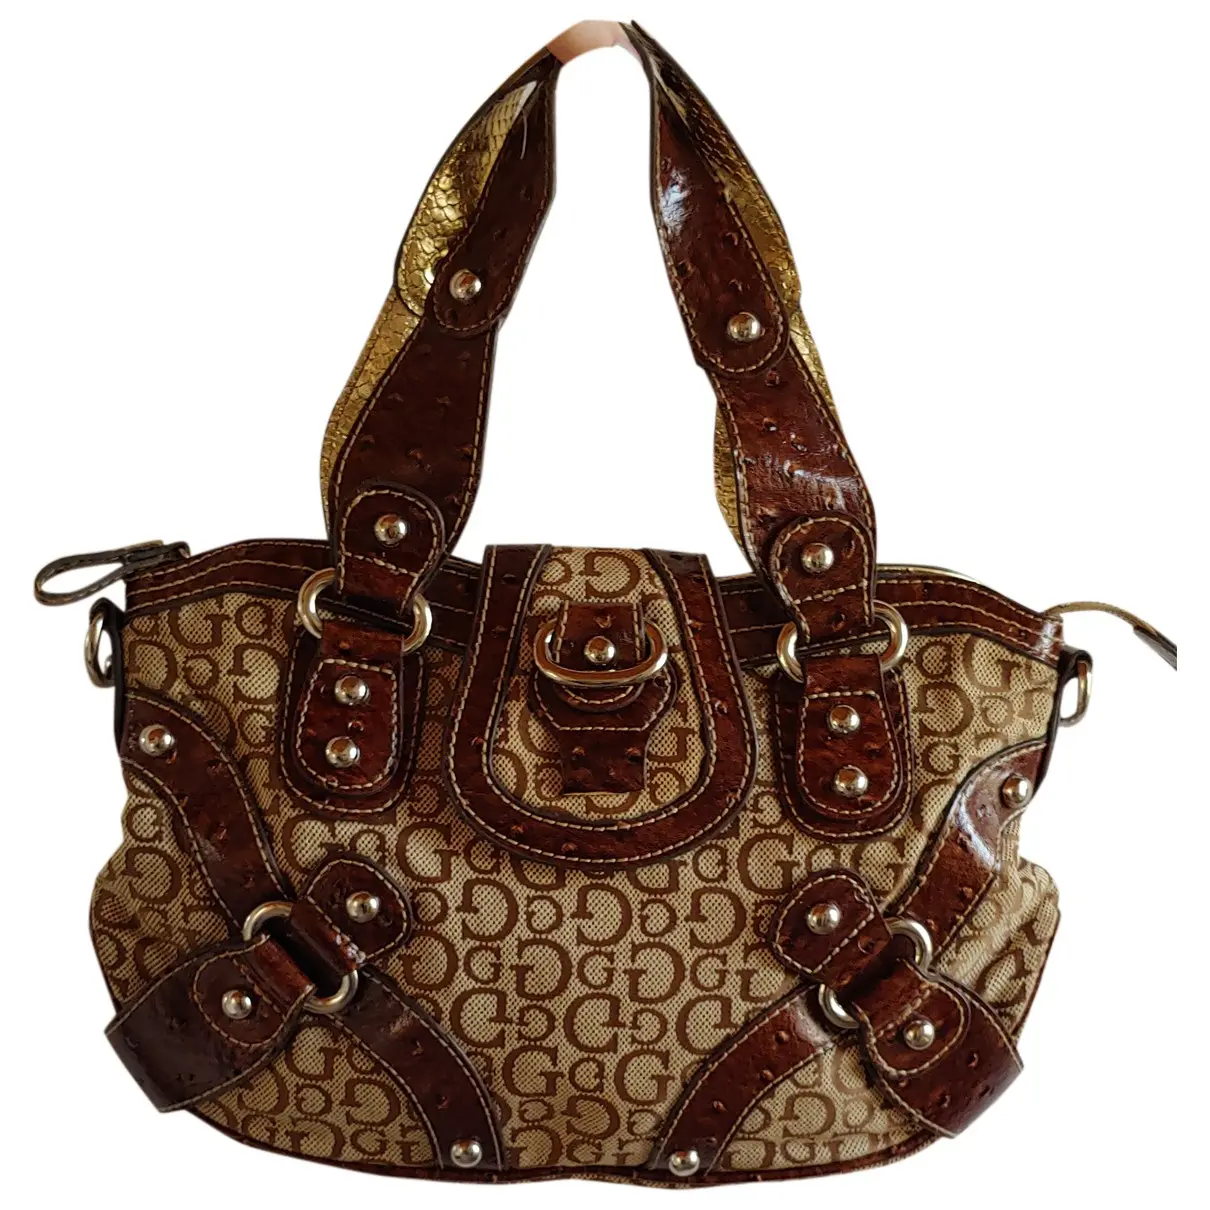 Patent leather handbag GUESS - Vintage